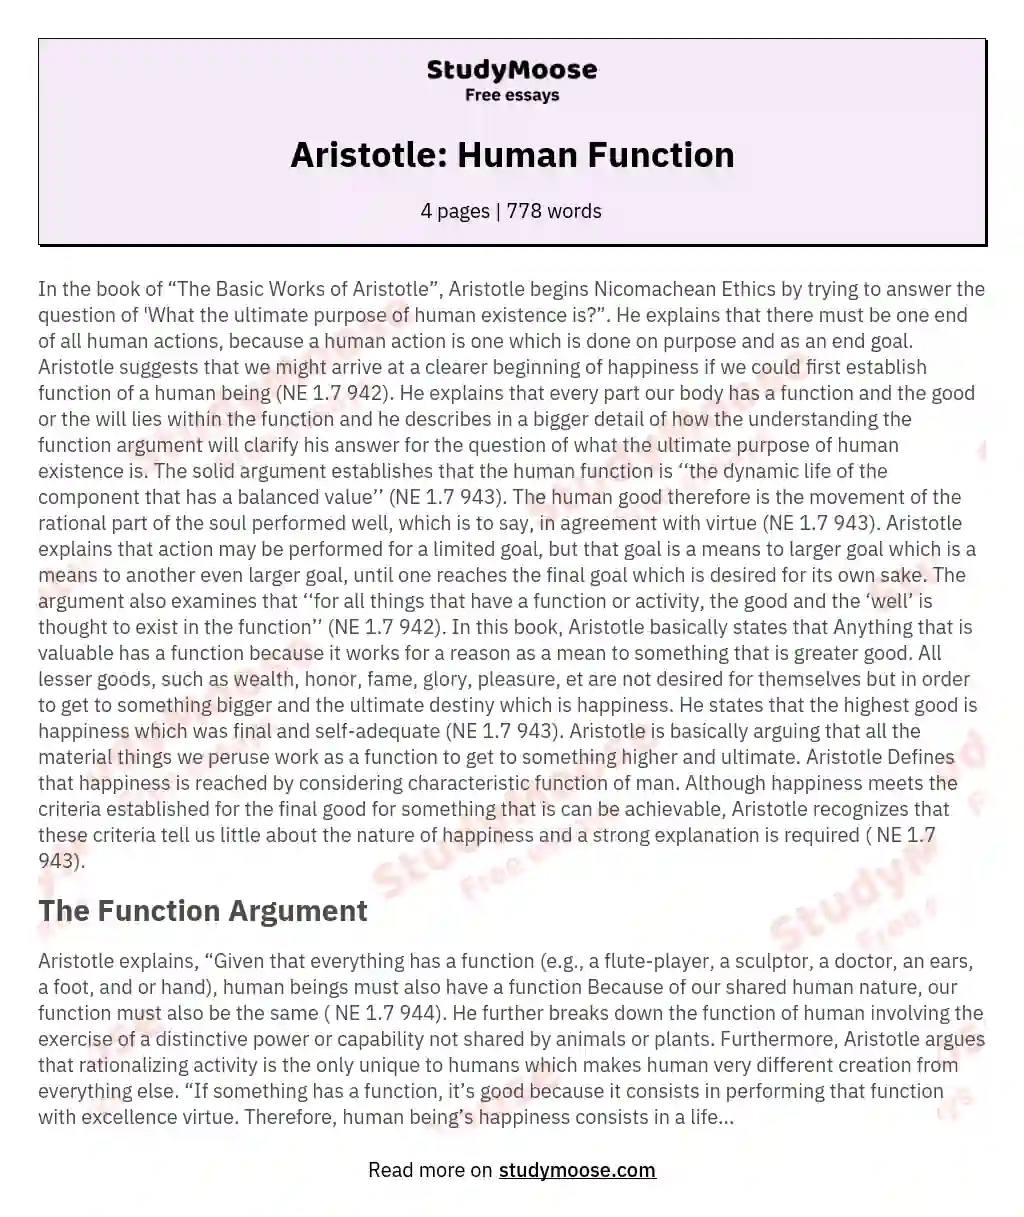 Aristotle: Human Function essay